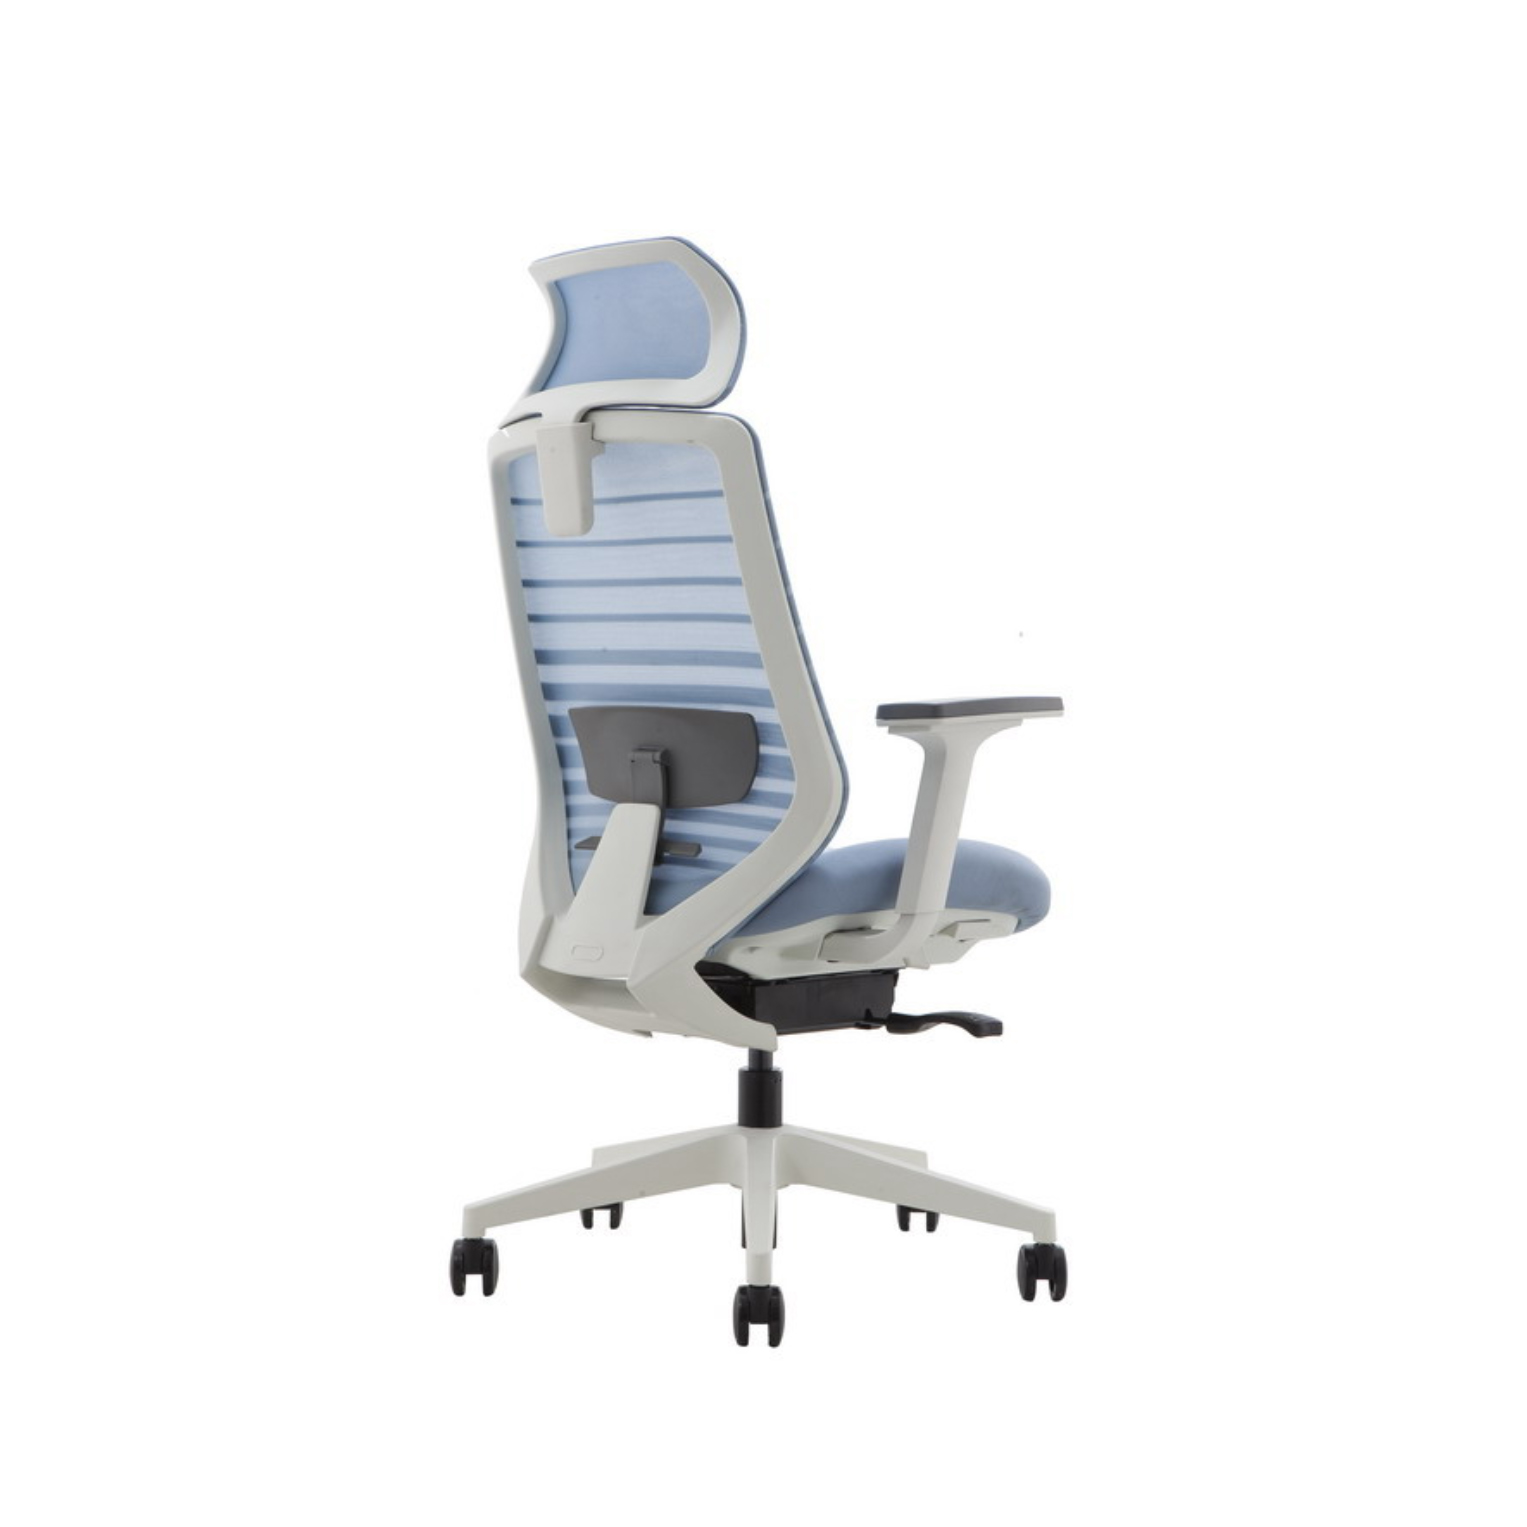 Comfort Ergonomic high back mesh back chair with Headrest-ESP-002A